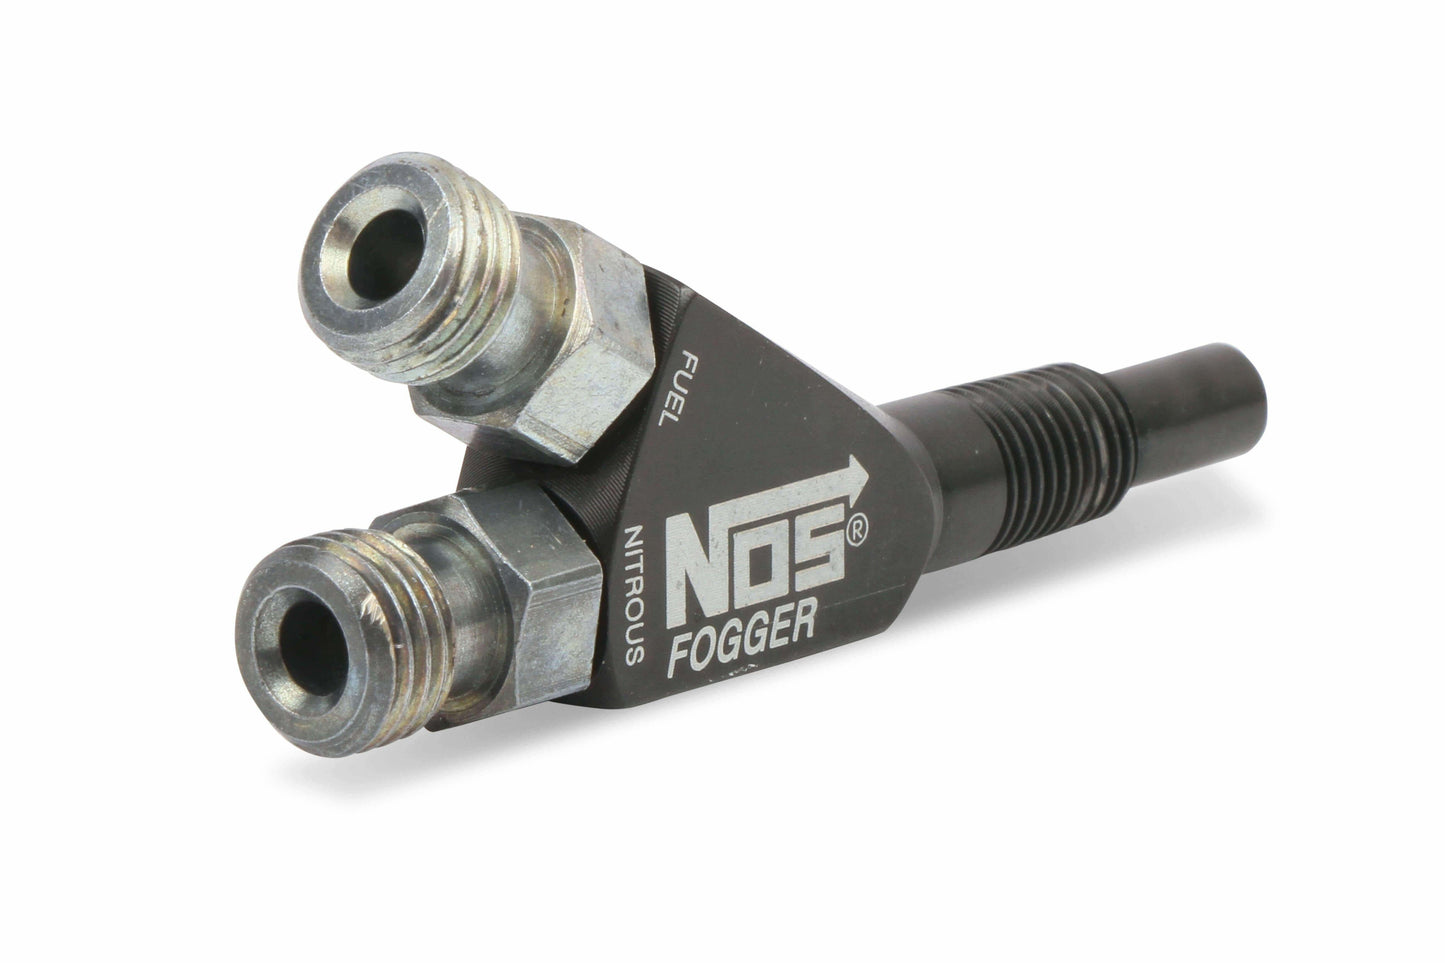 NOS Custom Nitrous Plumbing Kit , Pro Shot Fogger